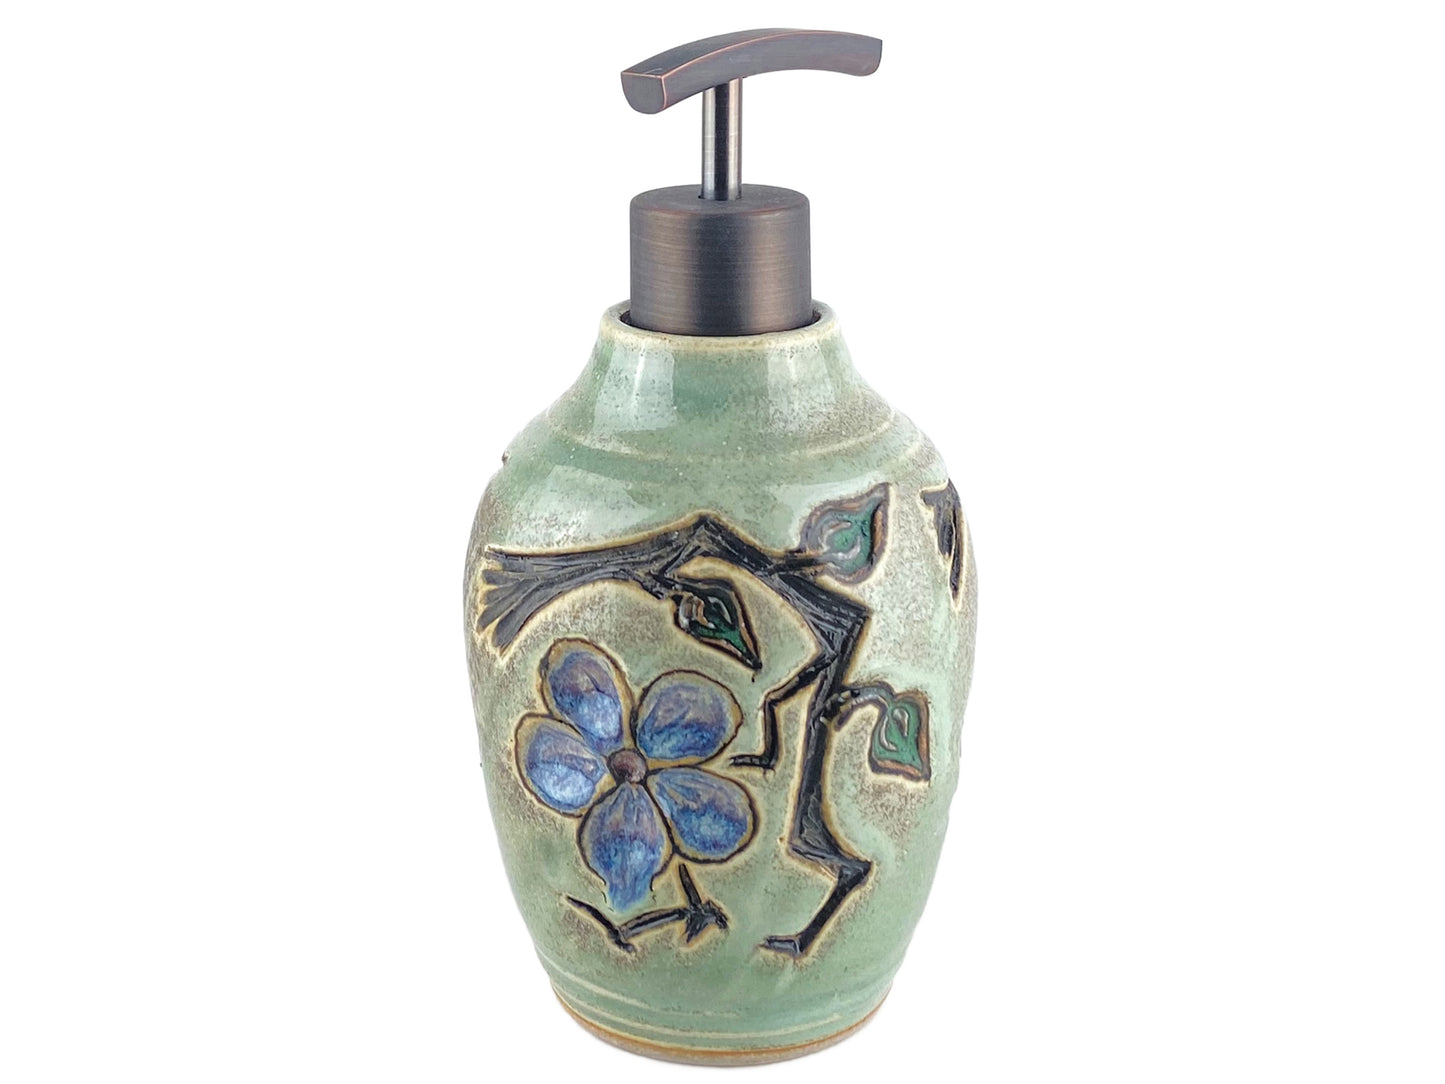 16 oz. Liquid Soap or Lotion Dispenser with Cherry Blossom Design